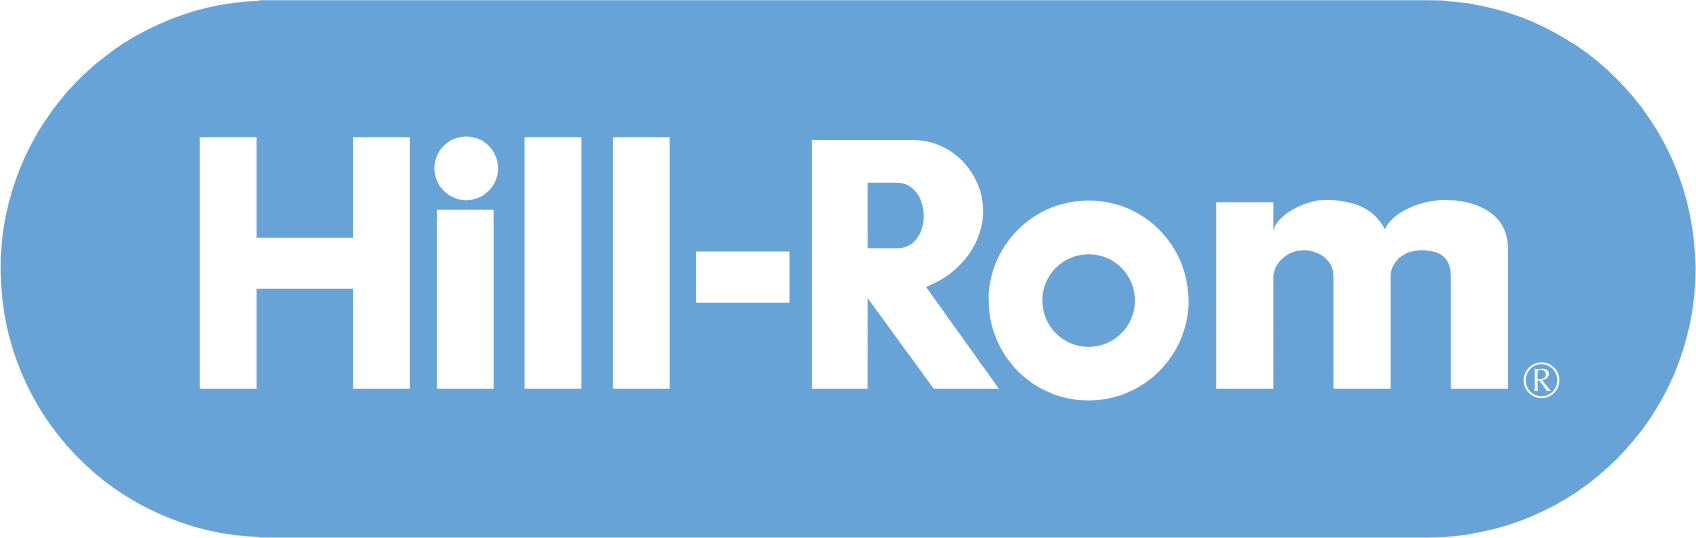 Hill-Rom logo (PNG transparent)